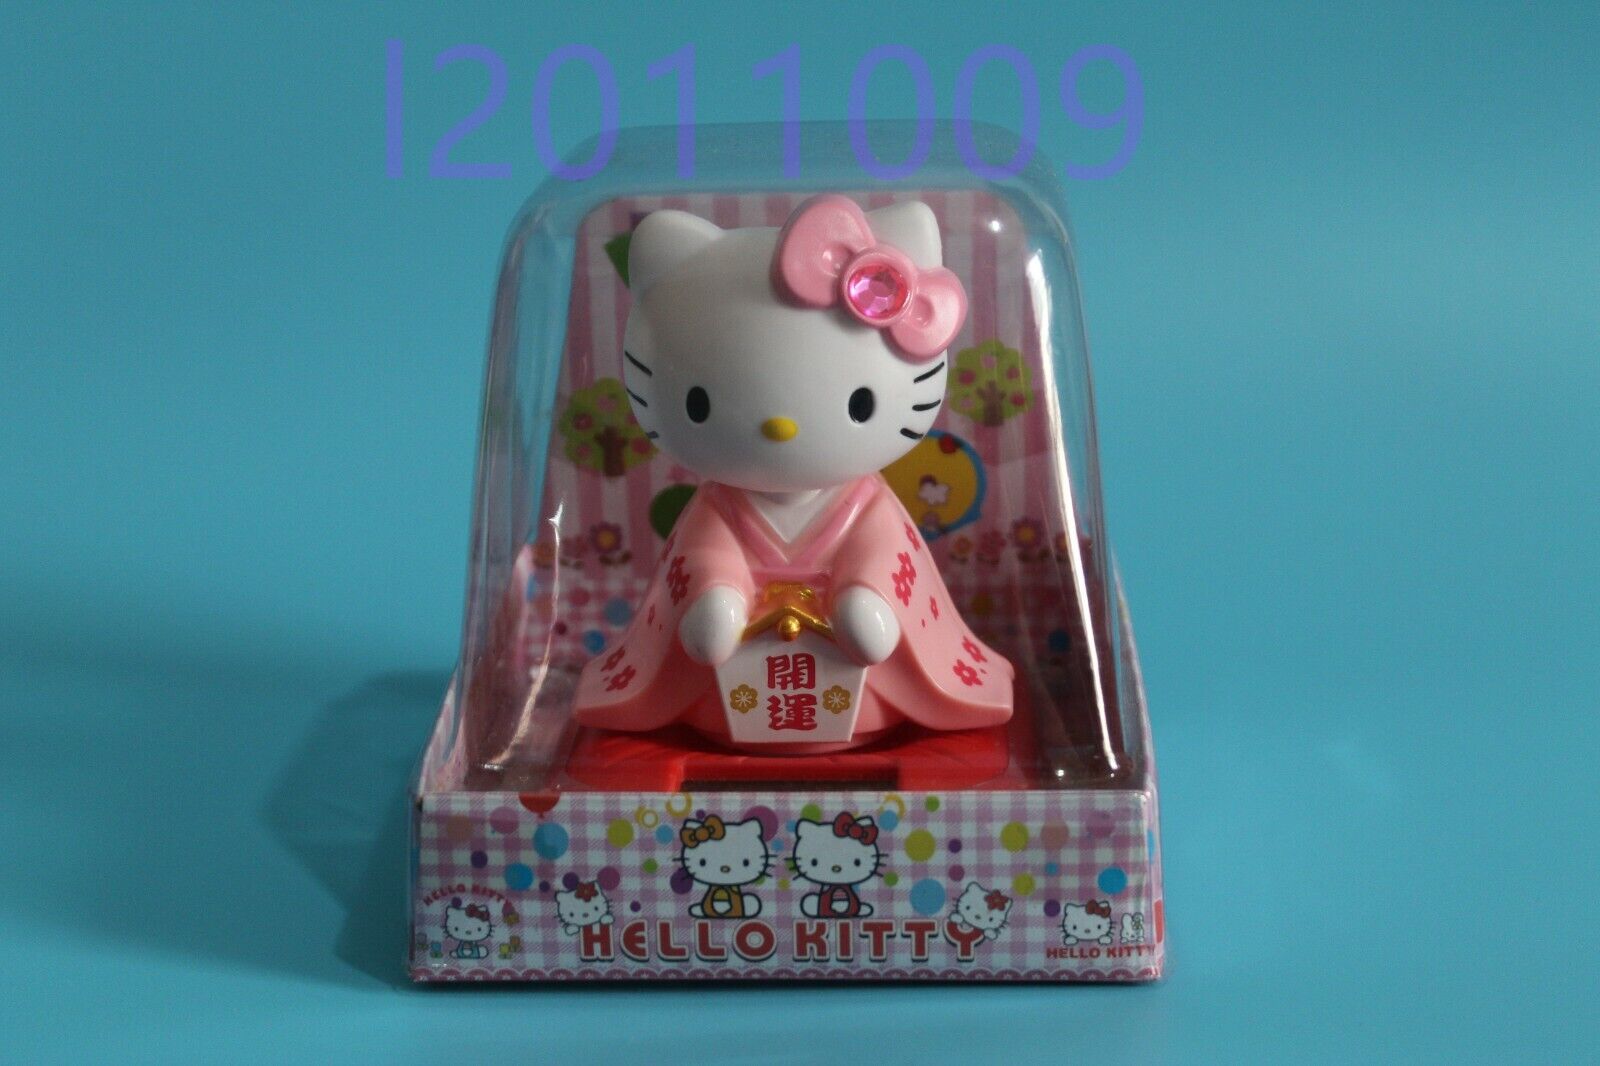 Cute solar shaking head pink kimono Hello Kitty Figure - Car/Home Decor Gift